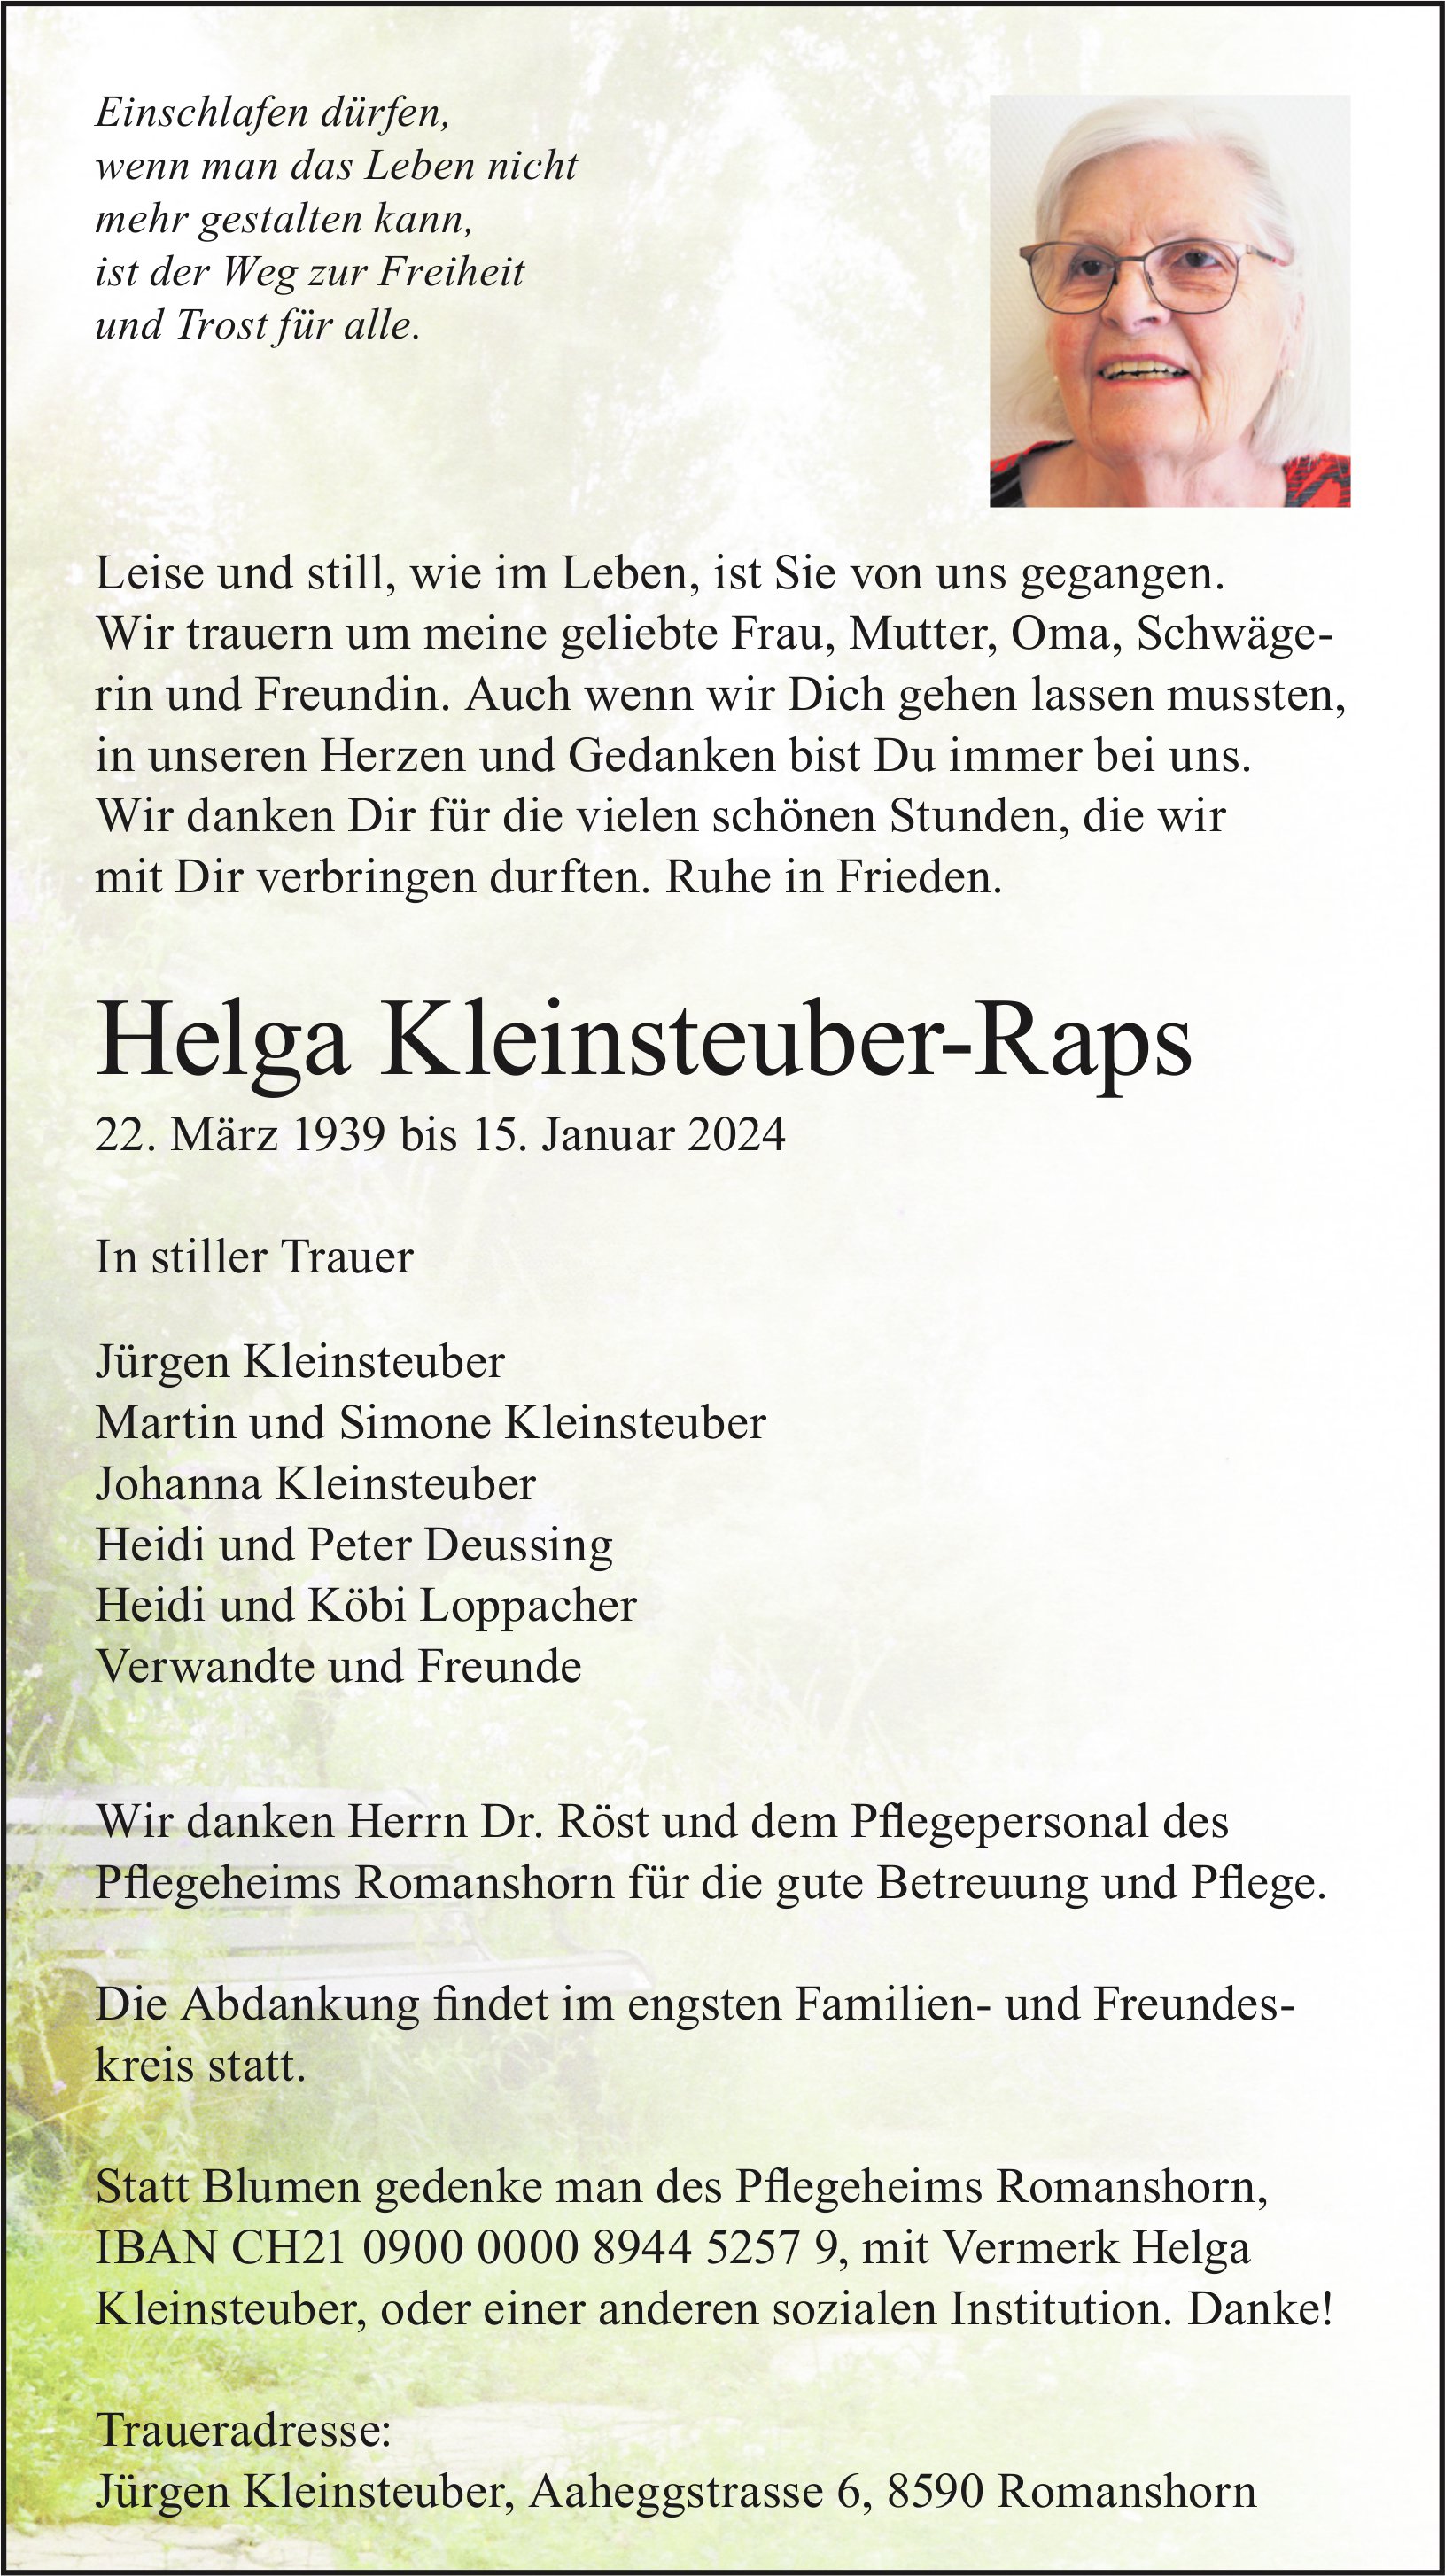 Kleinsteuber-Raps Helga, Januar 2024 / TA